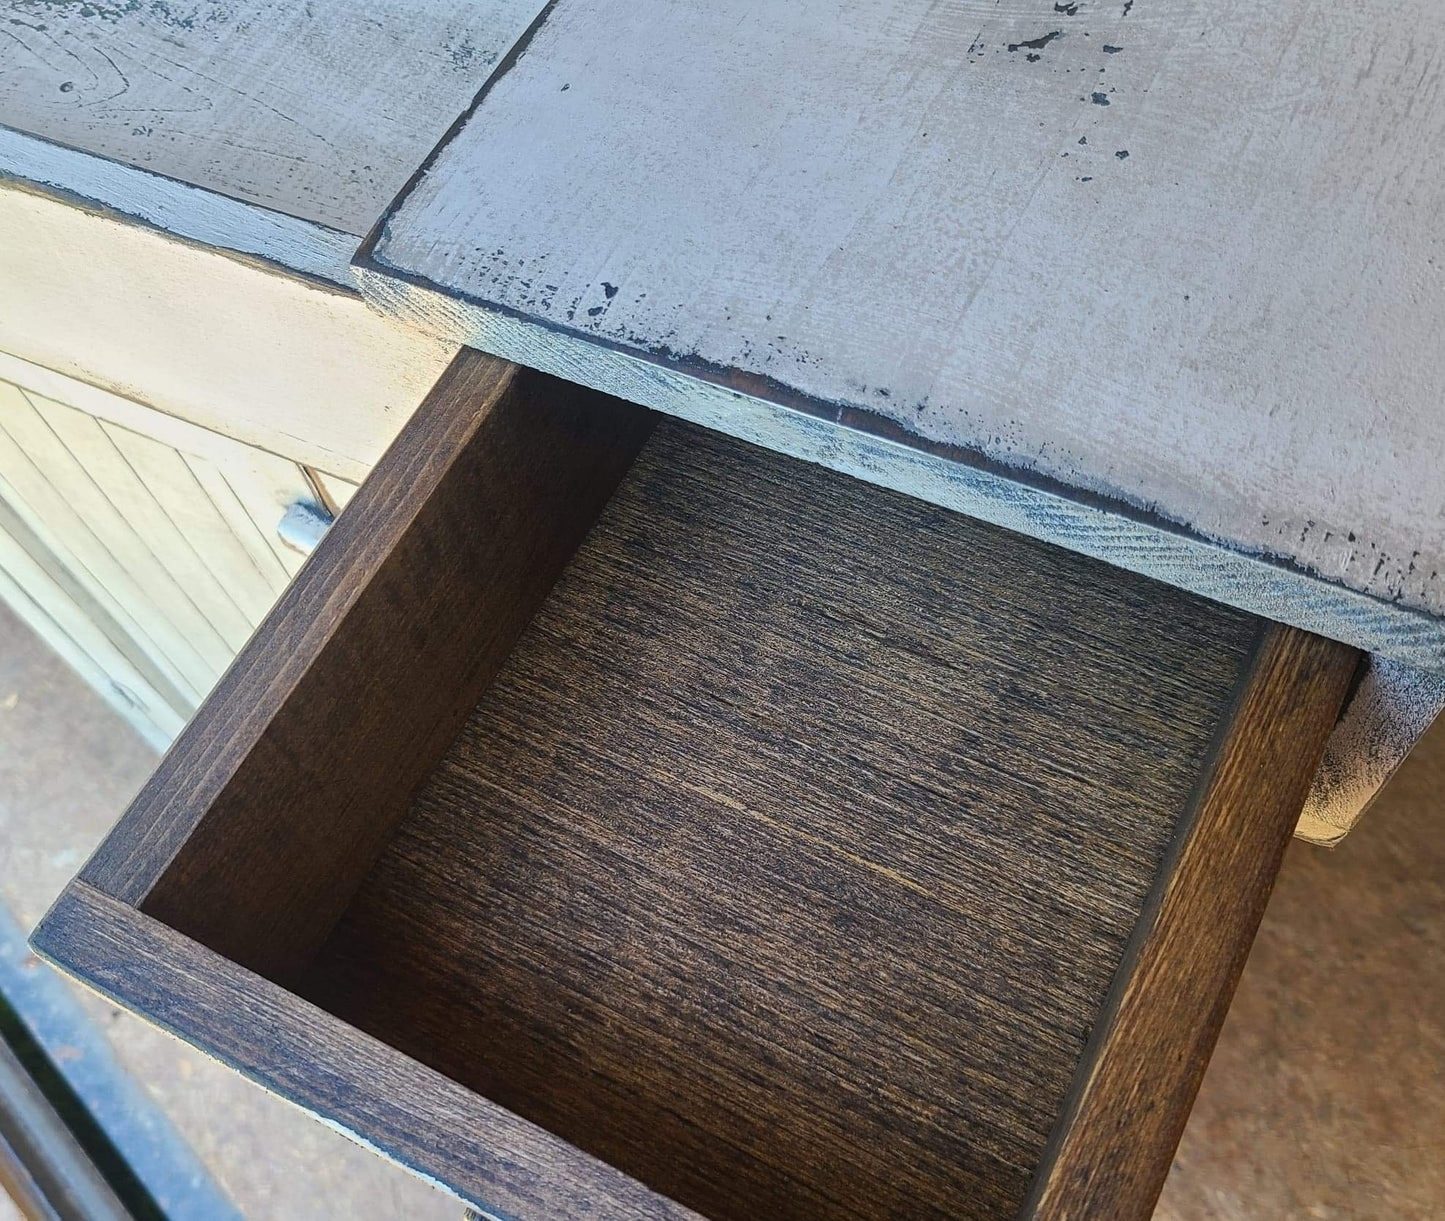 Rustic dry sink cabinet / cupboard / primitive style cabinet